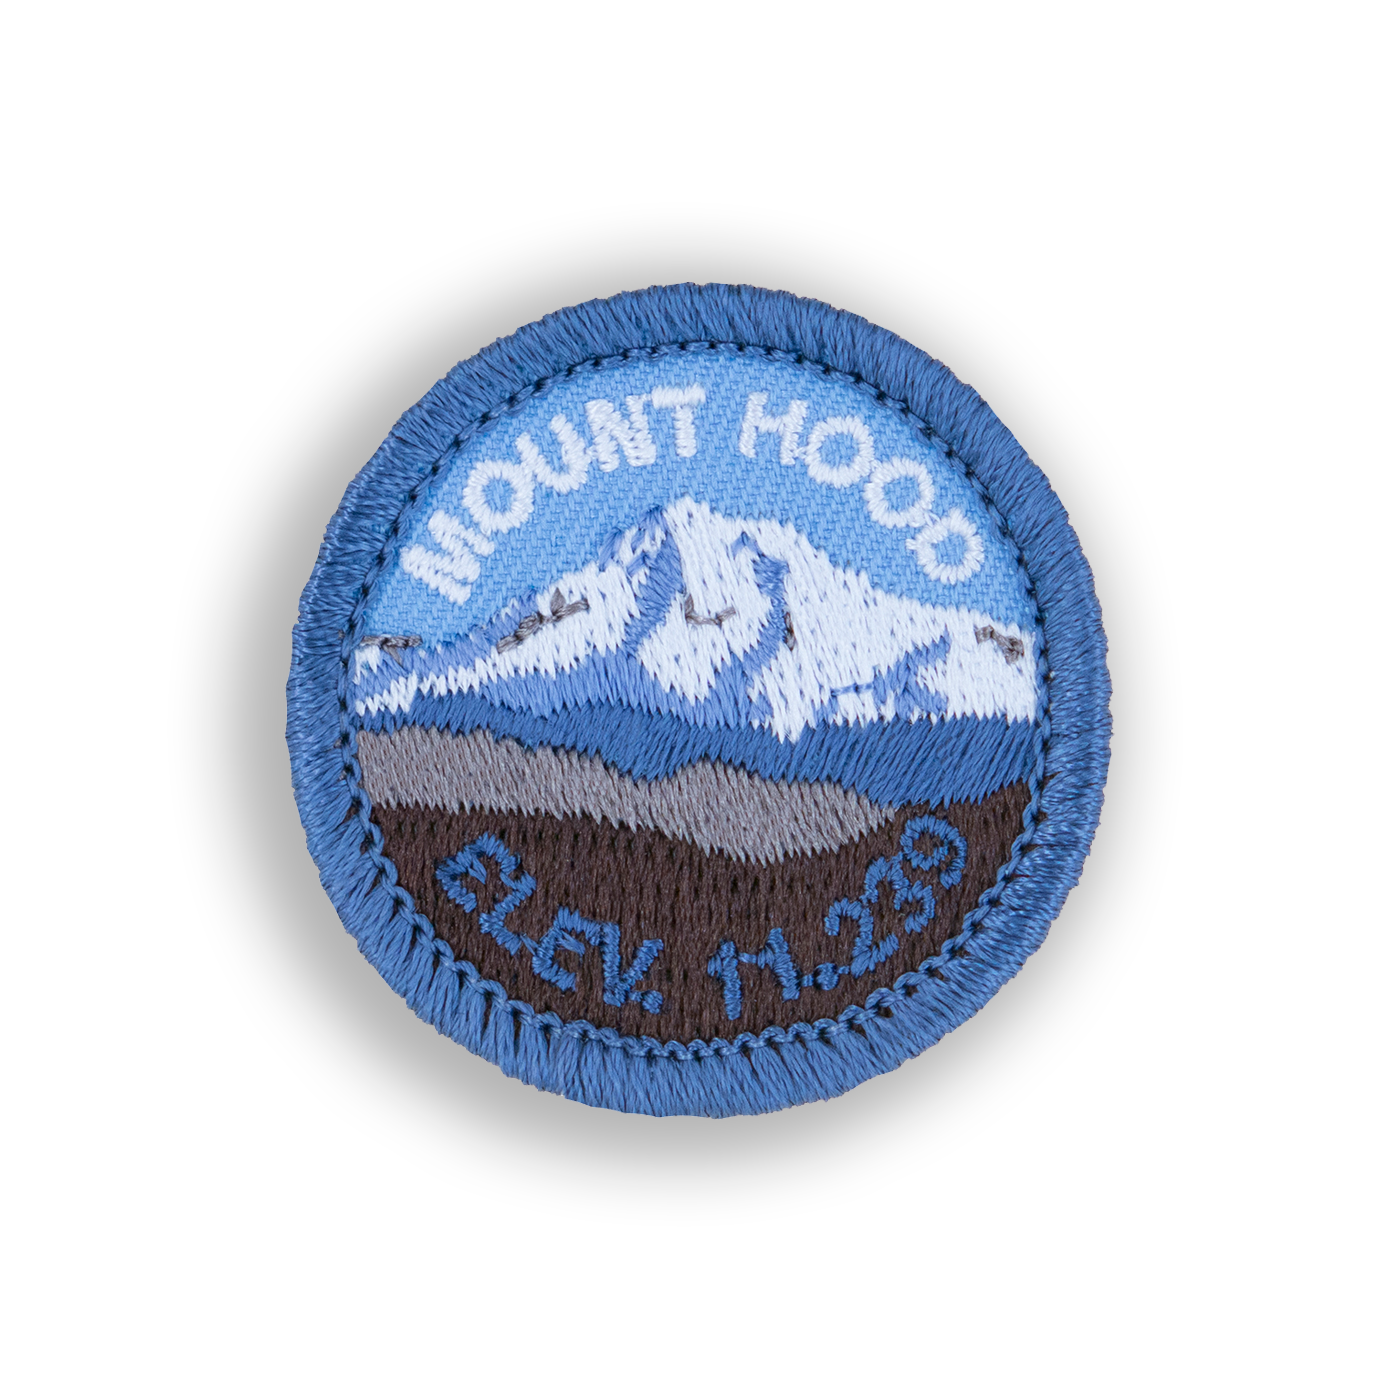 Mount Hood Patch | Demerit Wear - Fake Merit Badges